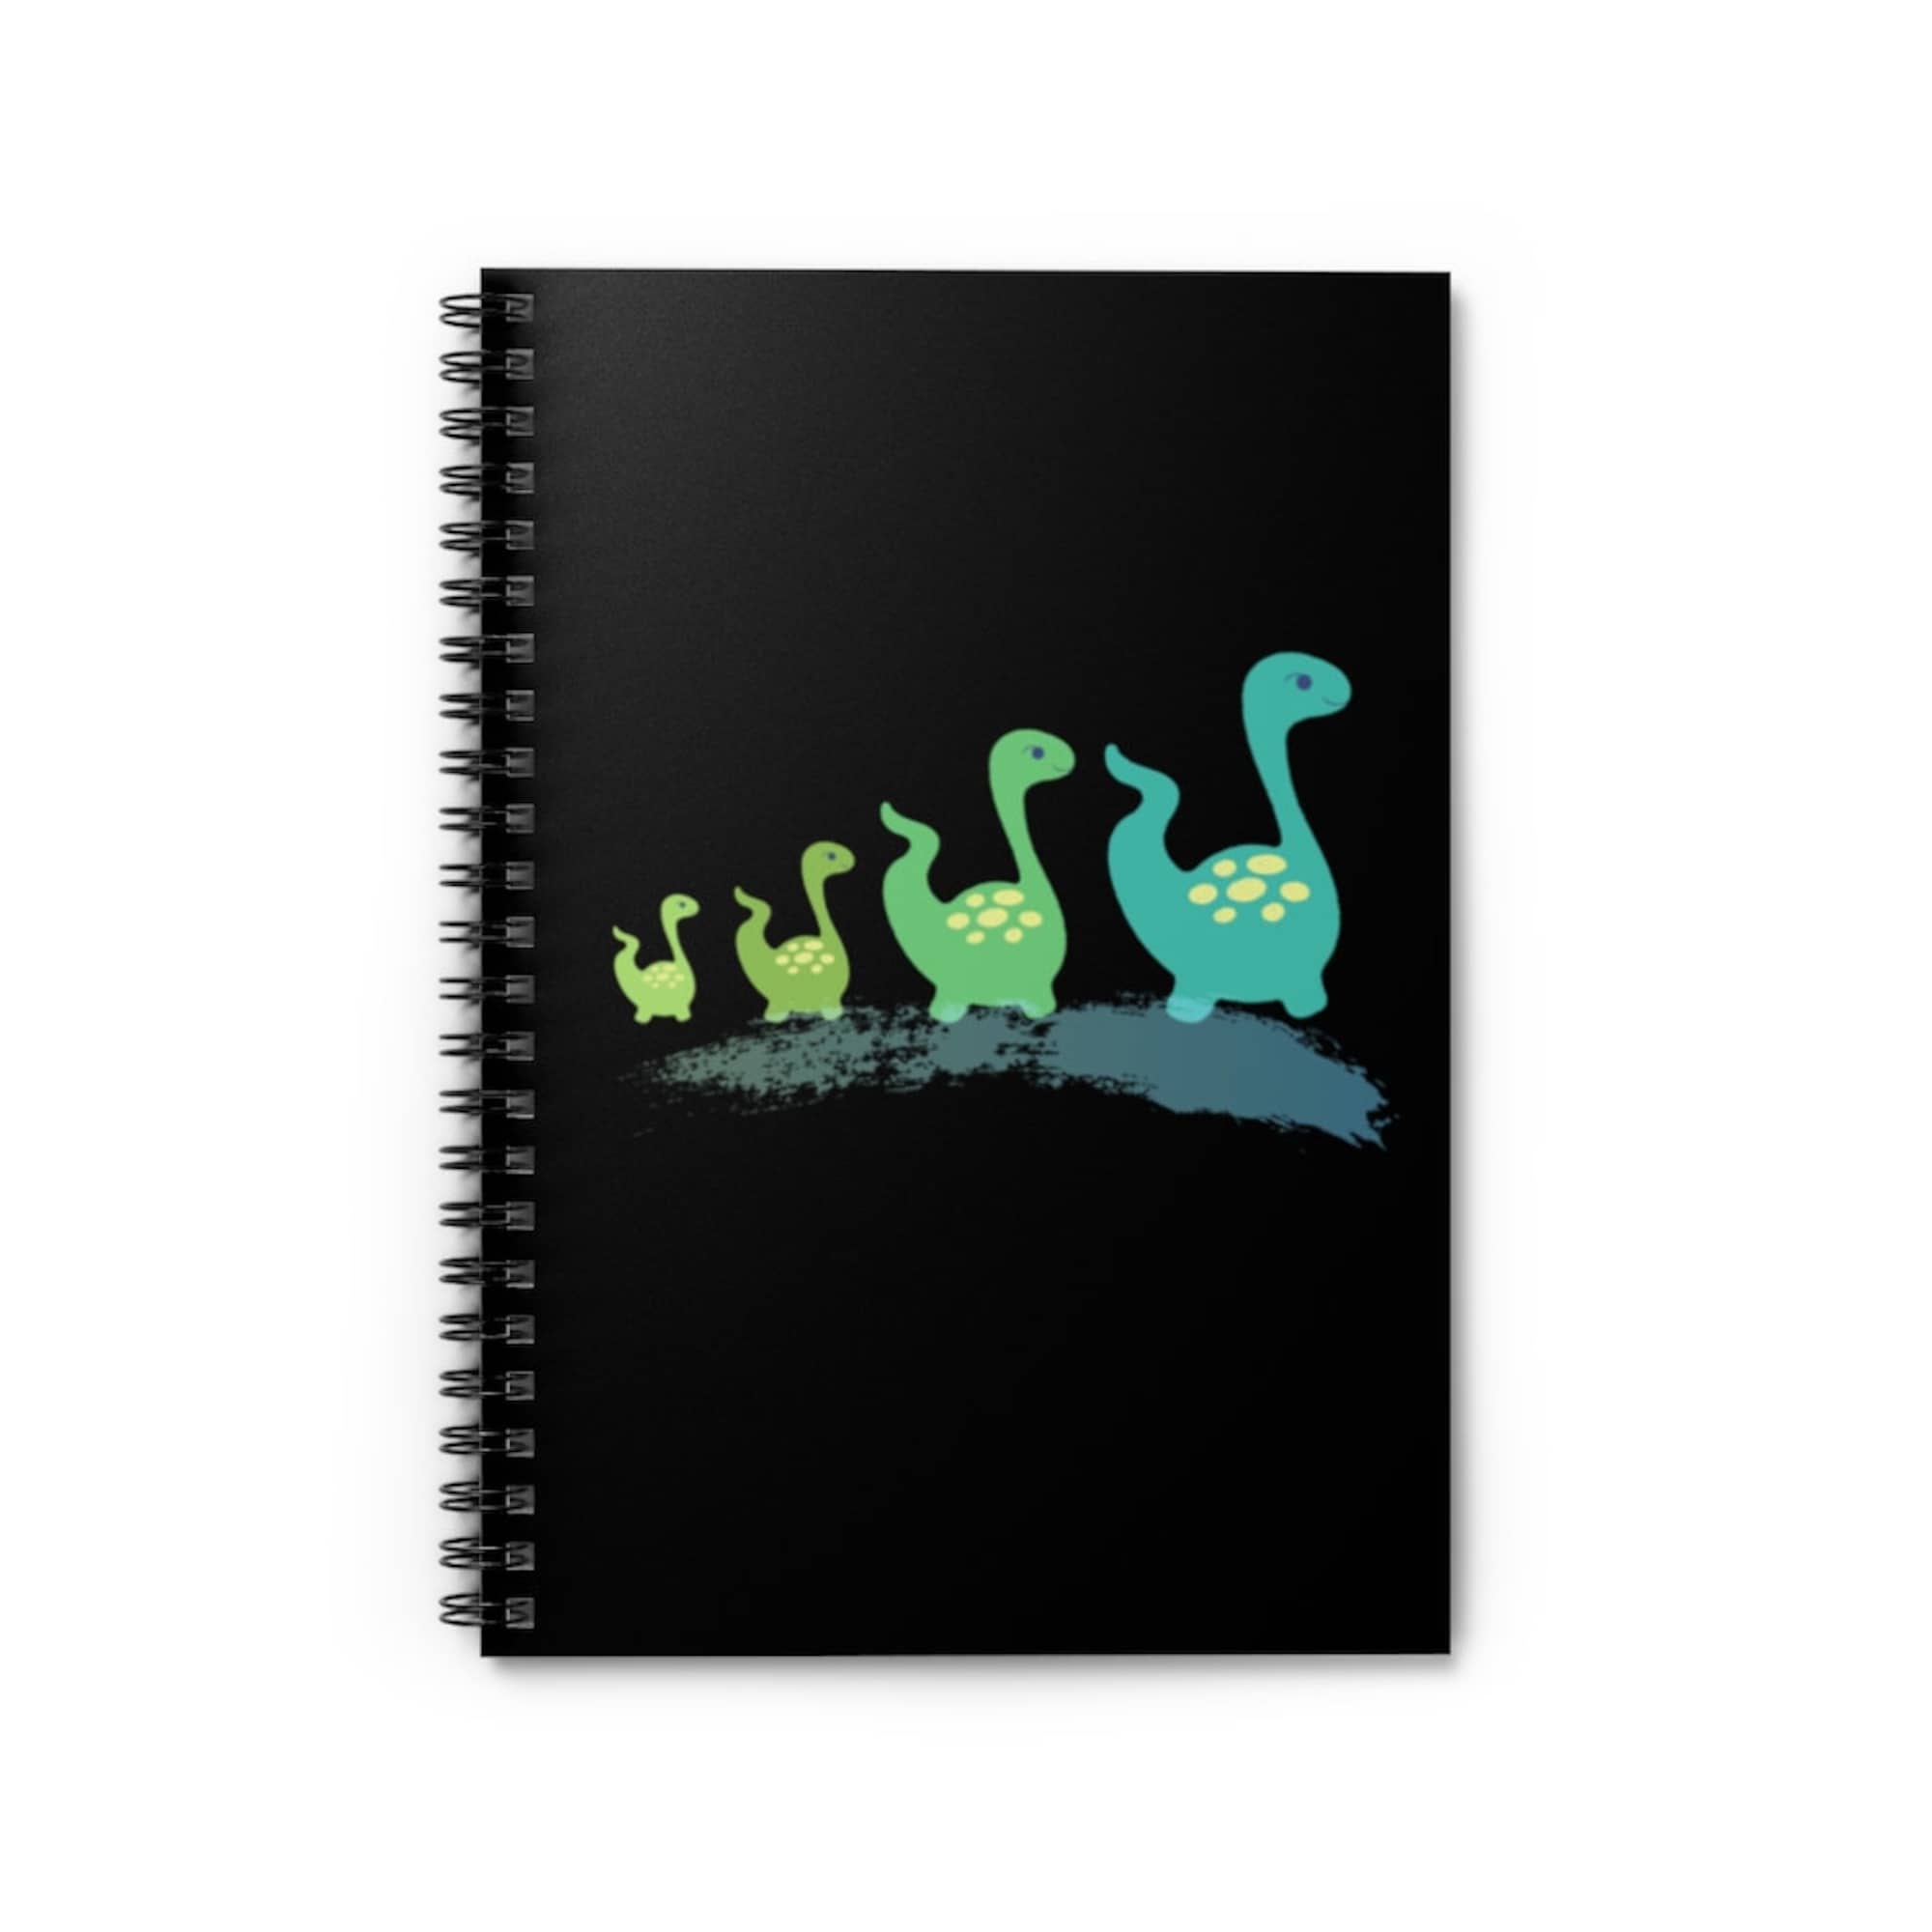 Spiral Notebook - Ruled Line - Dinosaur